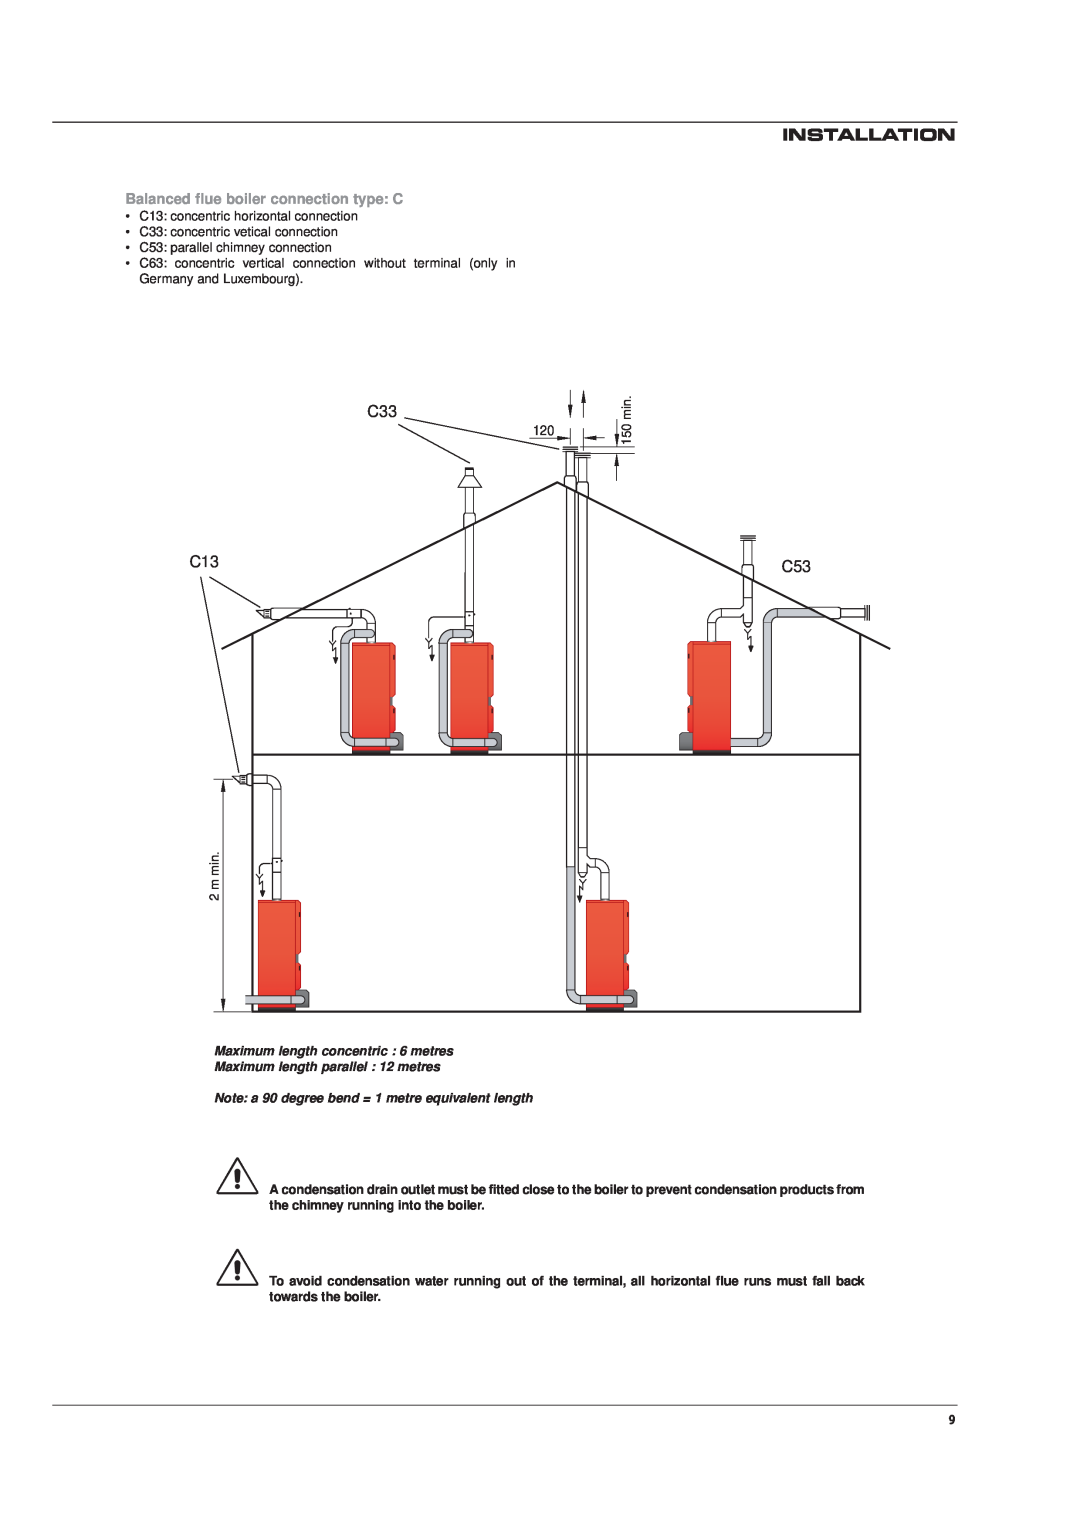 Heatmaster 100 N, HM 60 N, 70 N Installation, Balanced flue boiler connection type C, Maximum length concentric 6 metres 